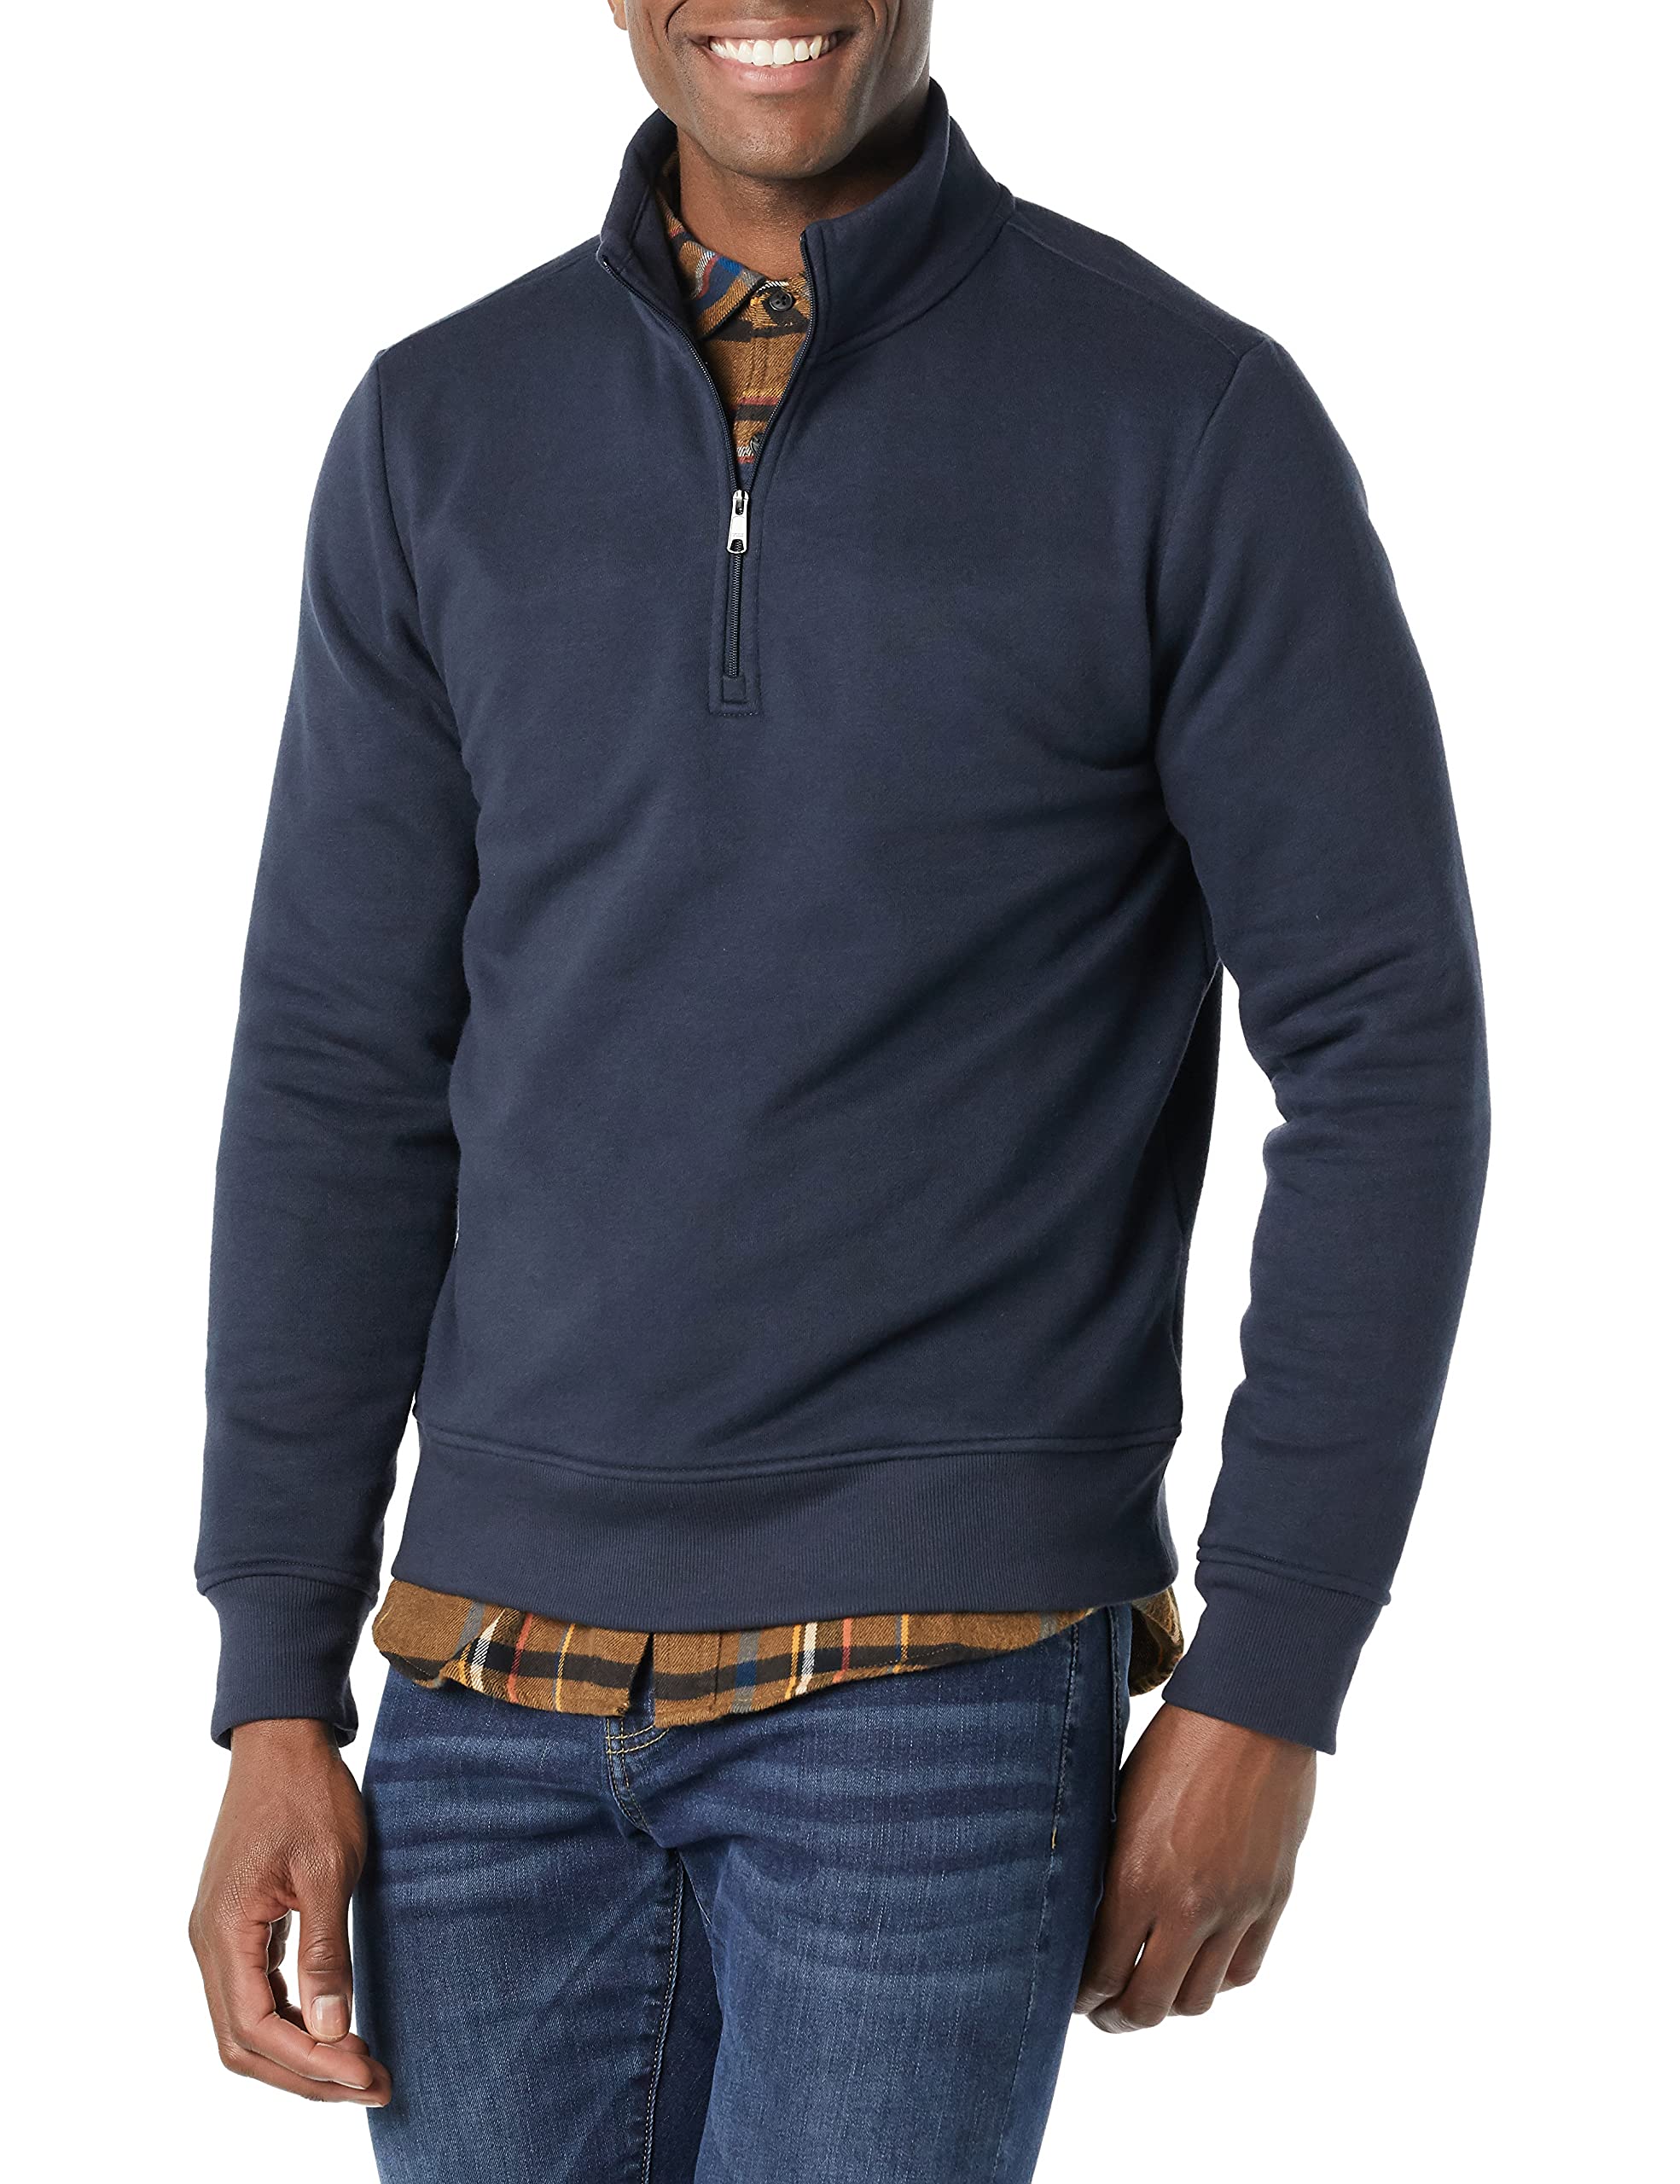 Amazon Essentials Men's Long-Sleeve Quarter-zip Fleece Sweatshirt (Various Colors & Sizes) $17.40 + Free Shipping w/ Prime or on $35+